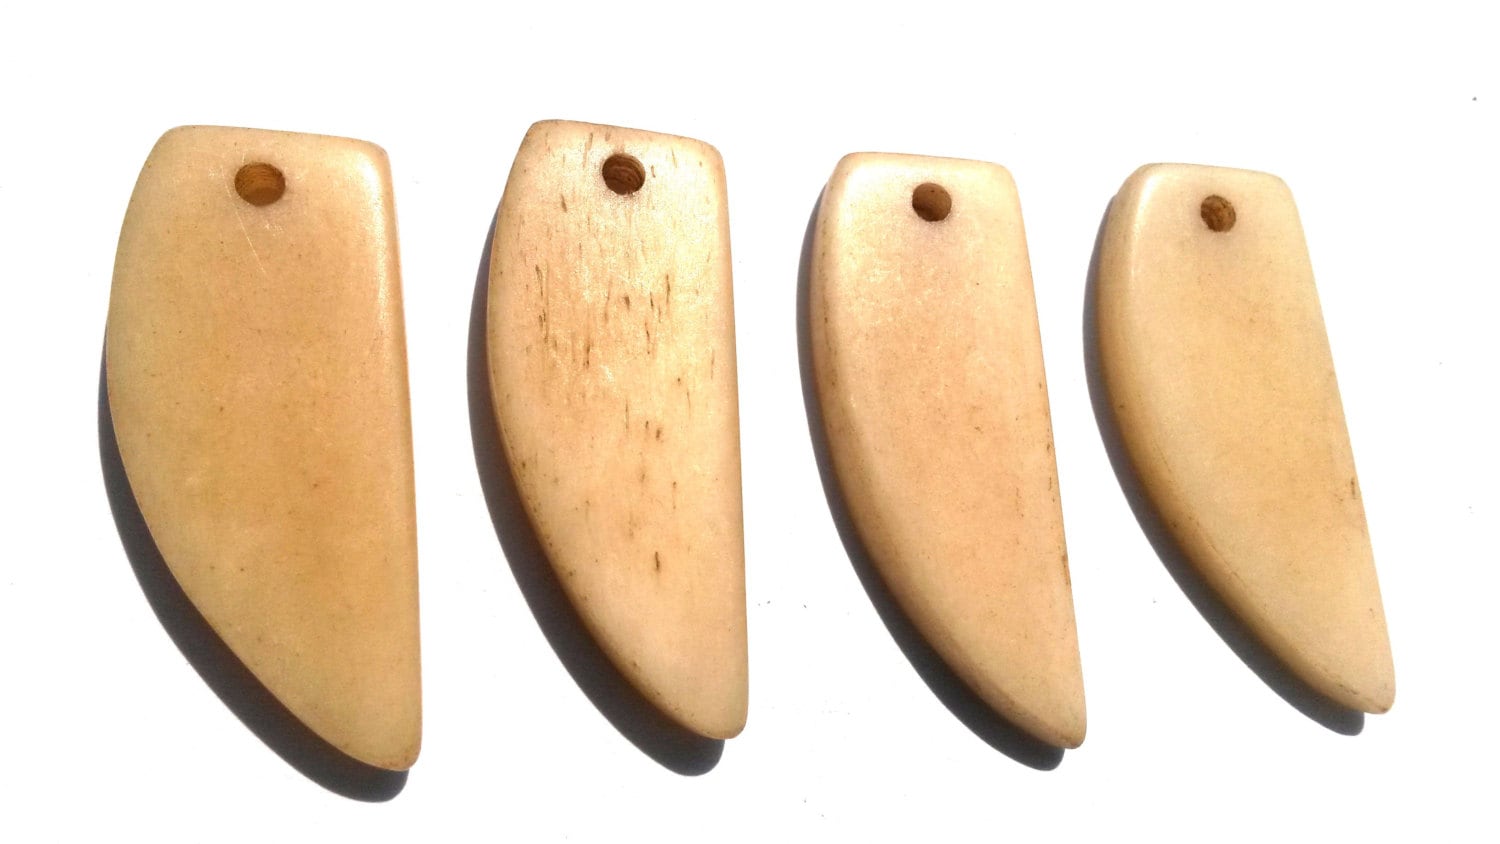 46x25mm Ivory Bone Animal Beads-0527-03